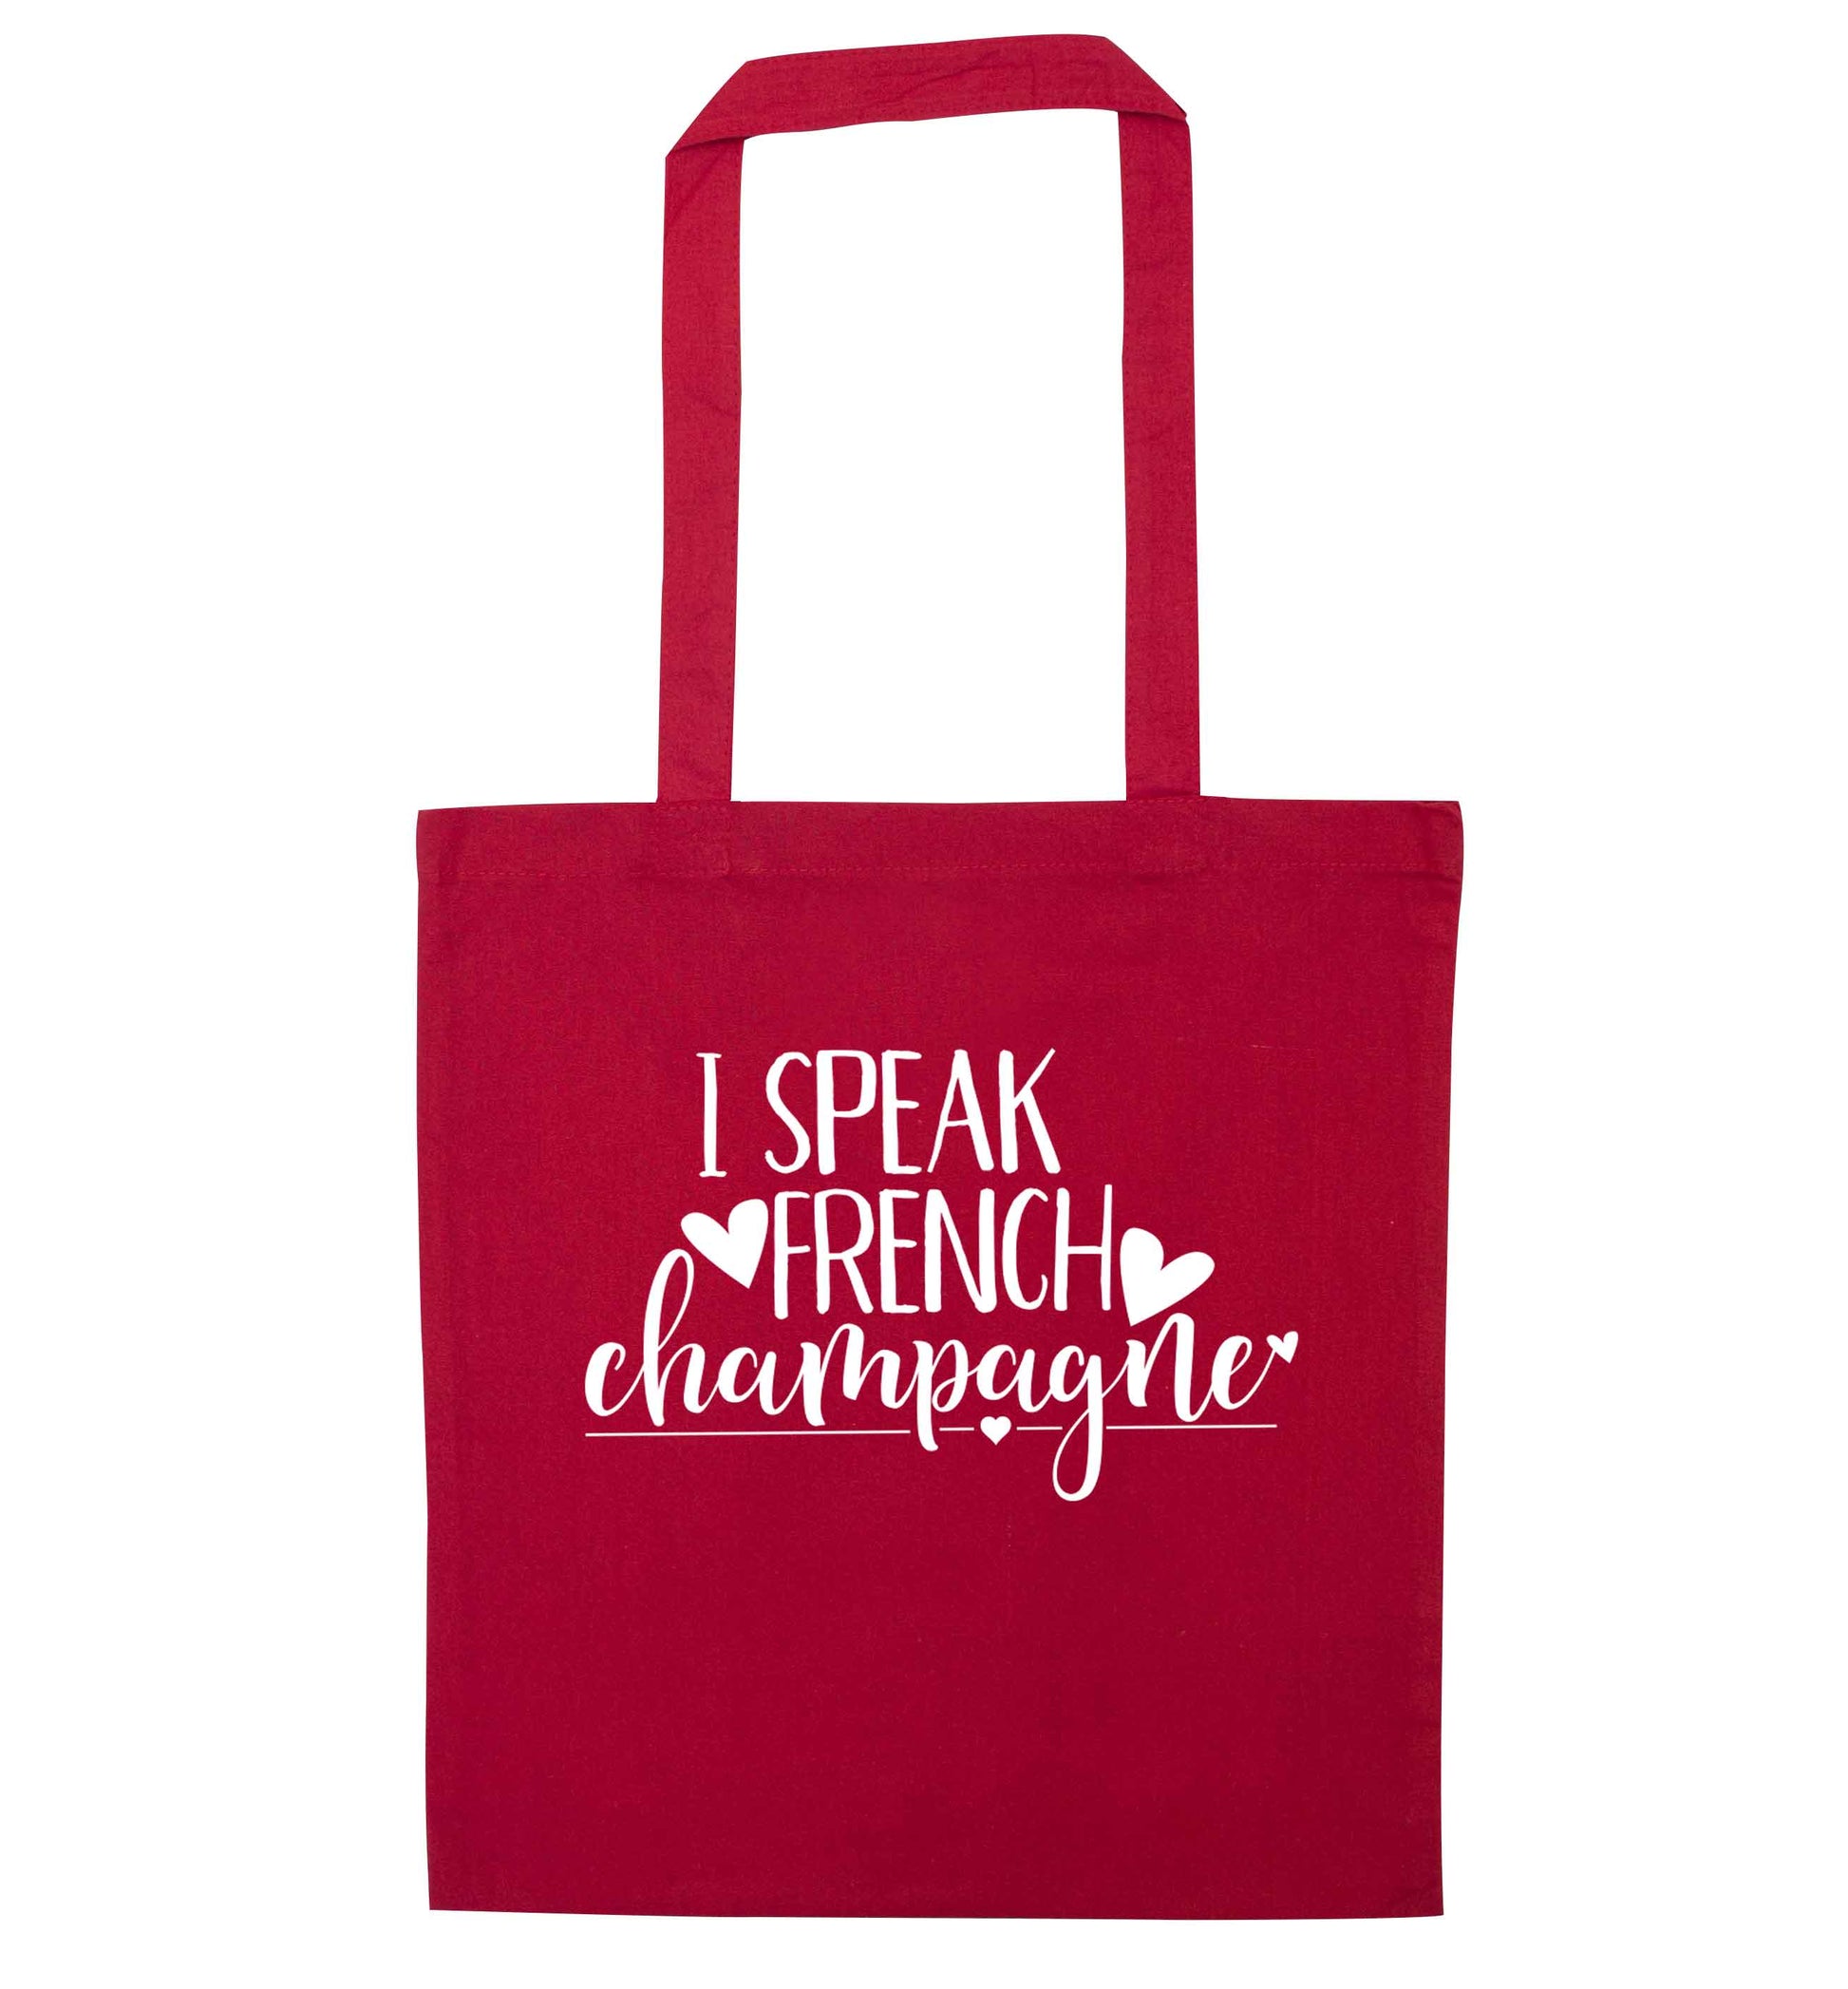 I speak french champagne red tote bag